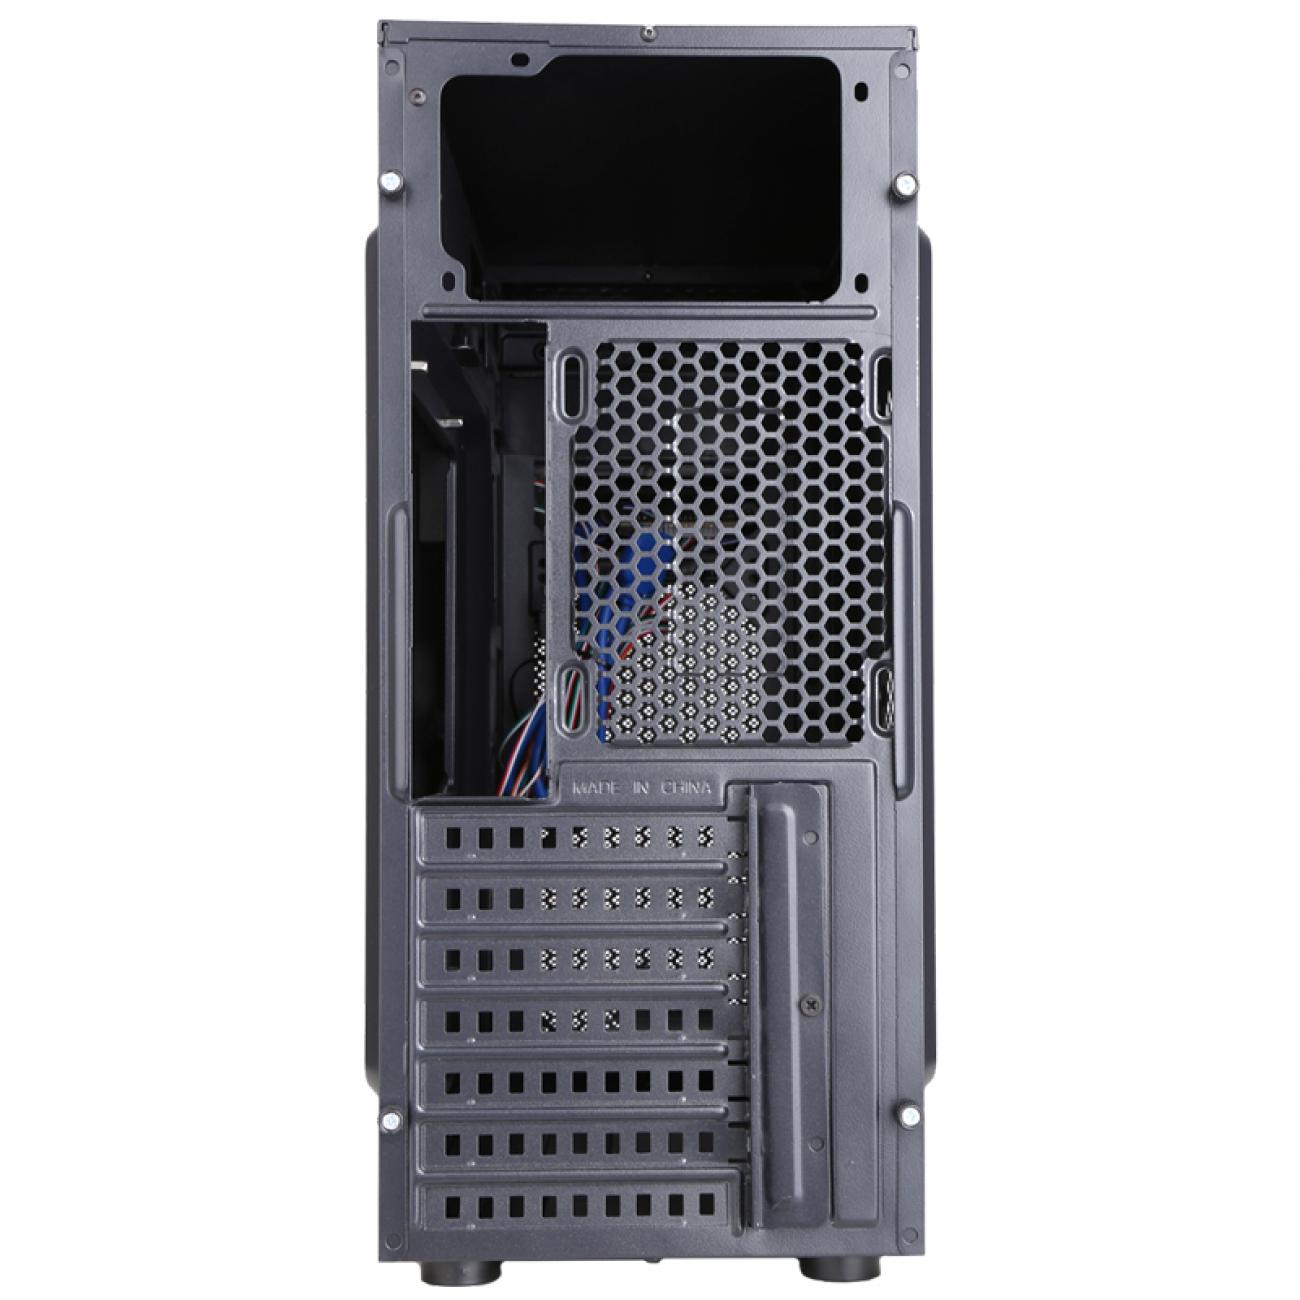 Case PRIME Dark - Middle Tower, ATX, 500W, USB3.0, 12cm fan